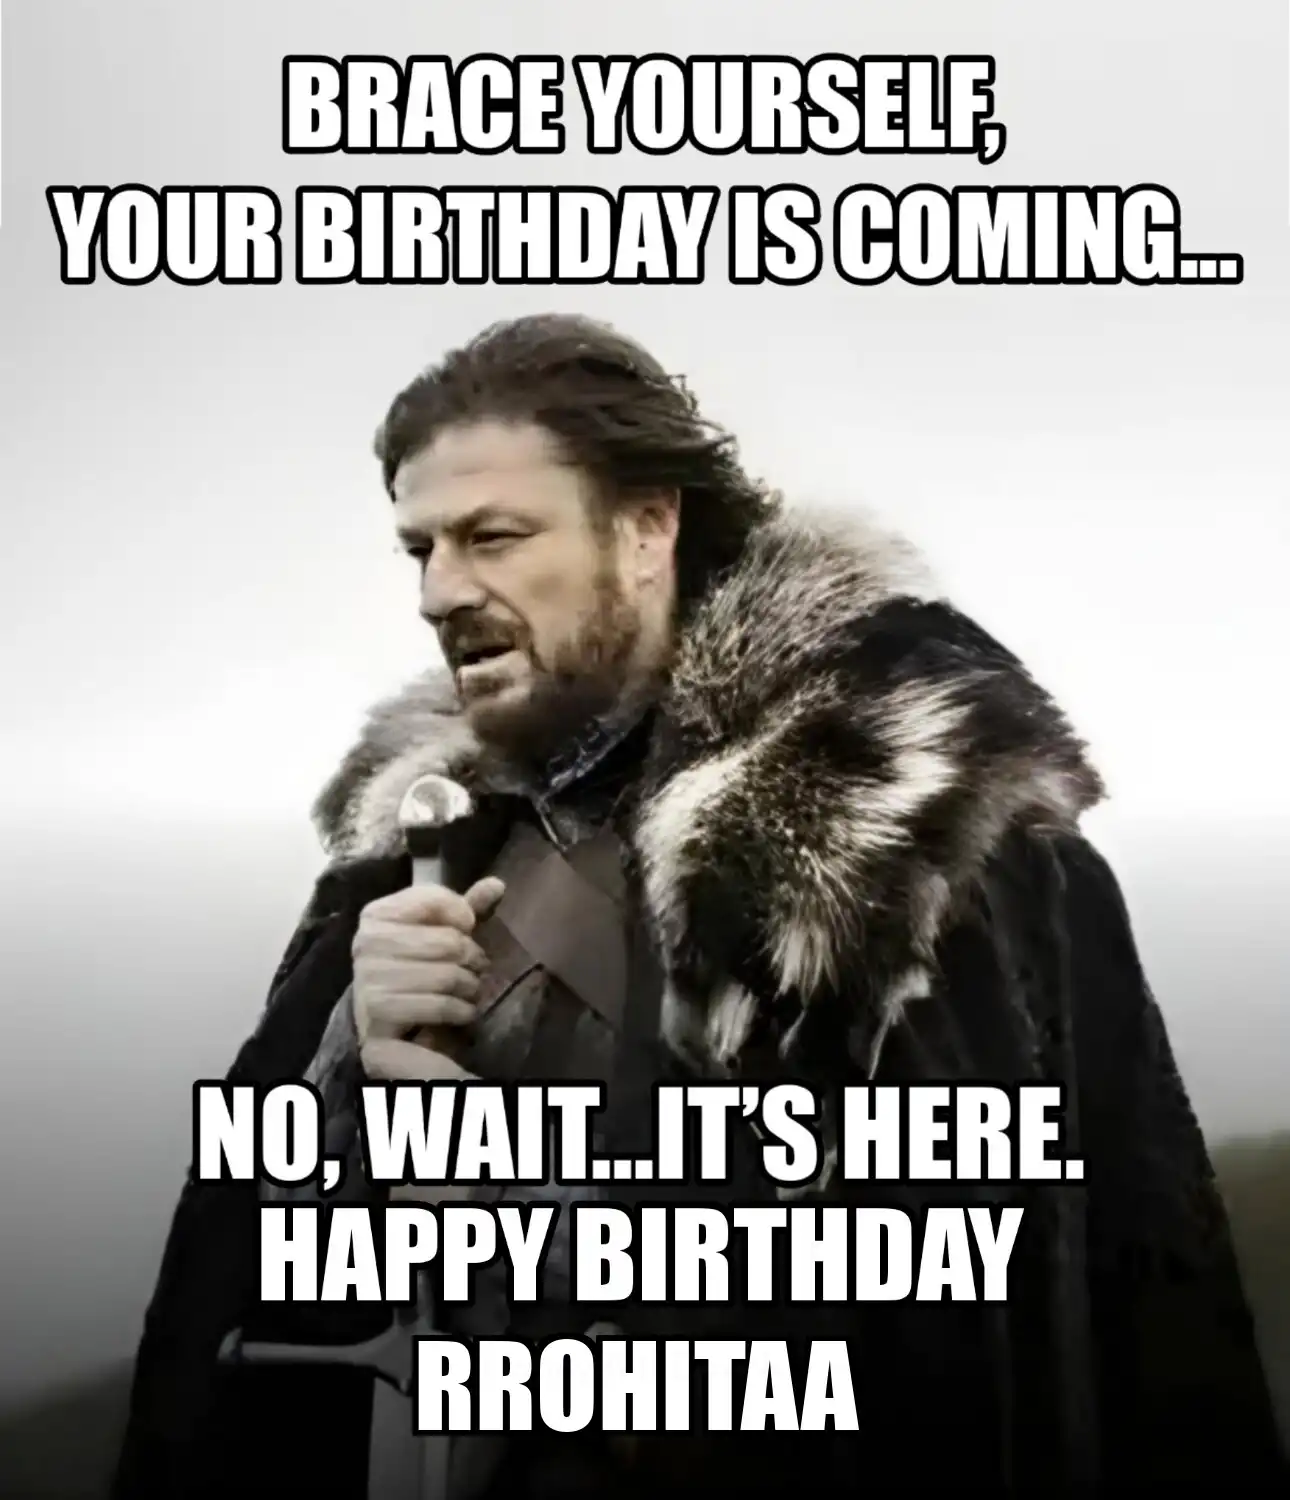 Happy Birthday Rrohitaa Brace Yourself Your Birthday Is Coming Meme